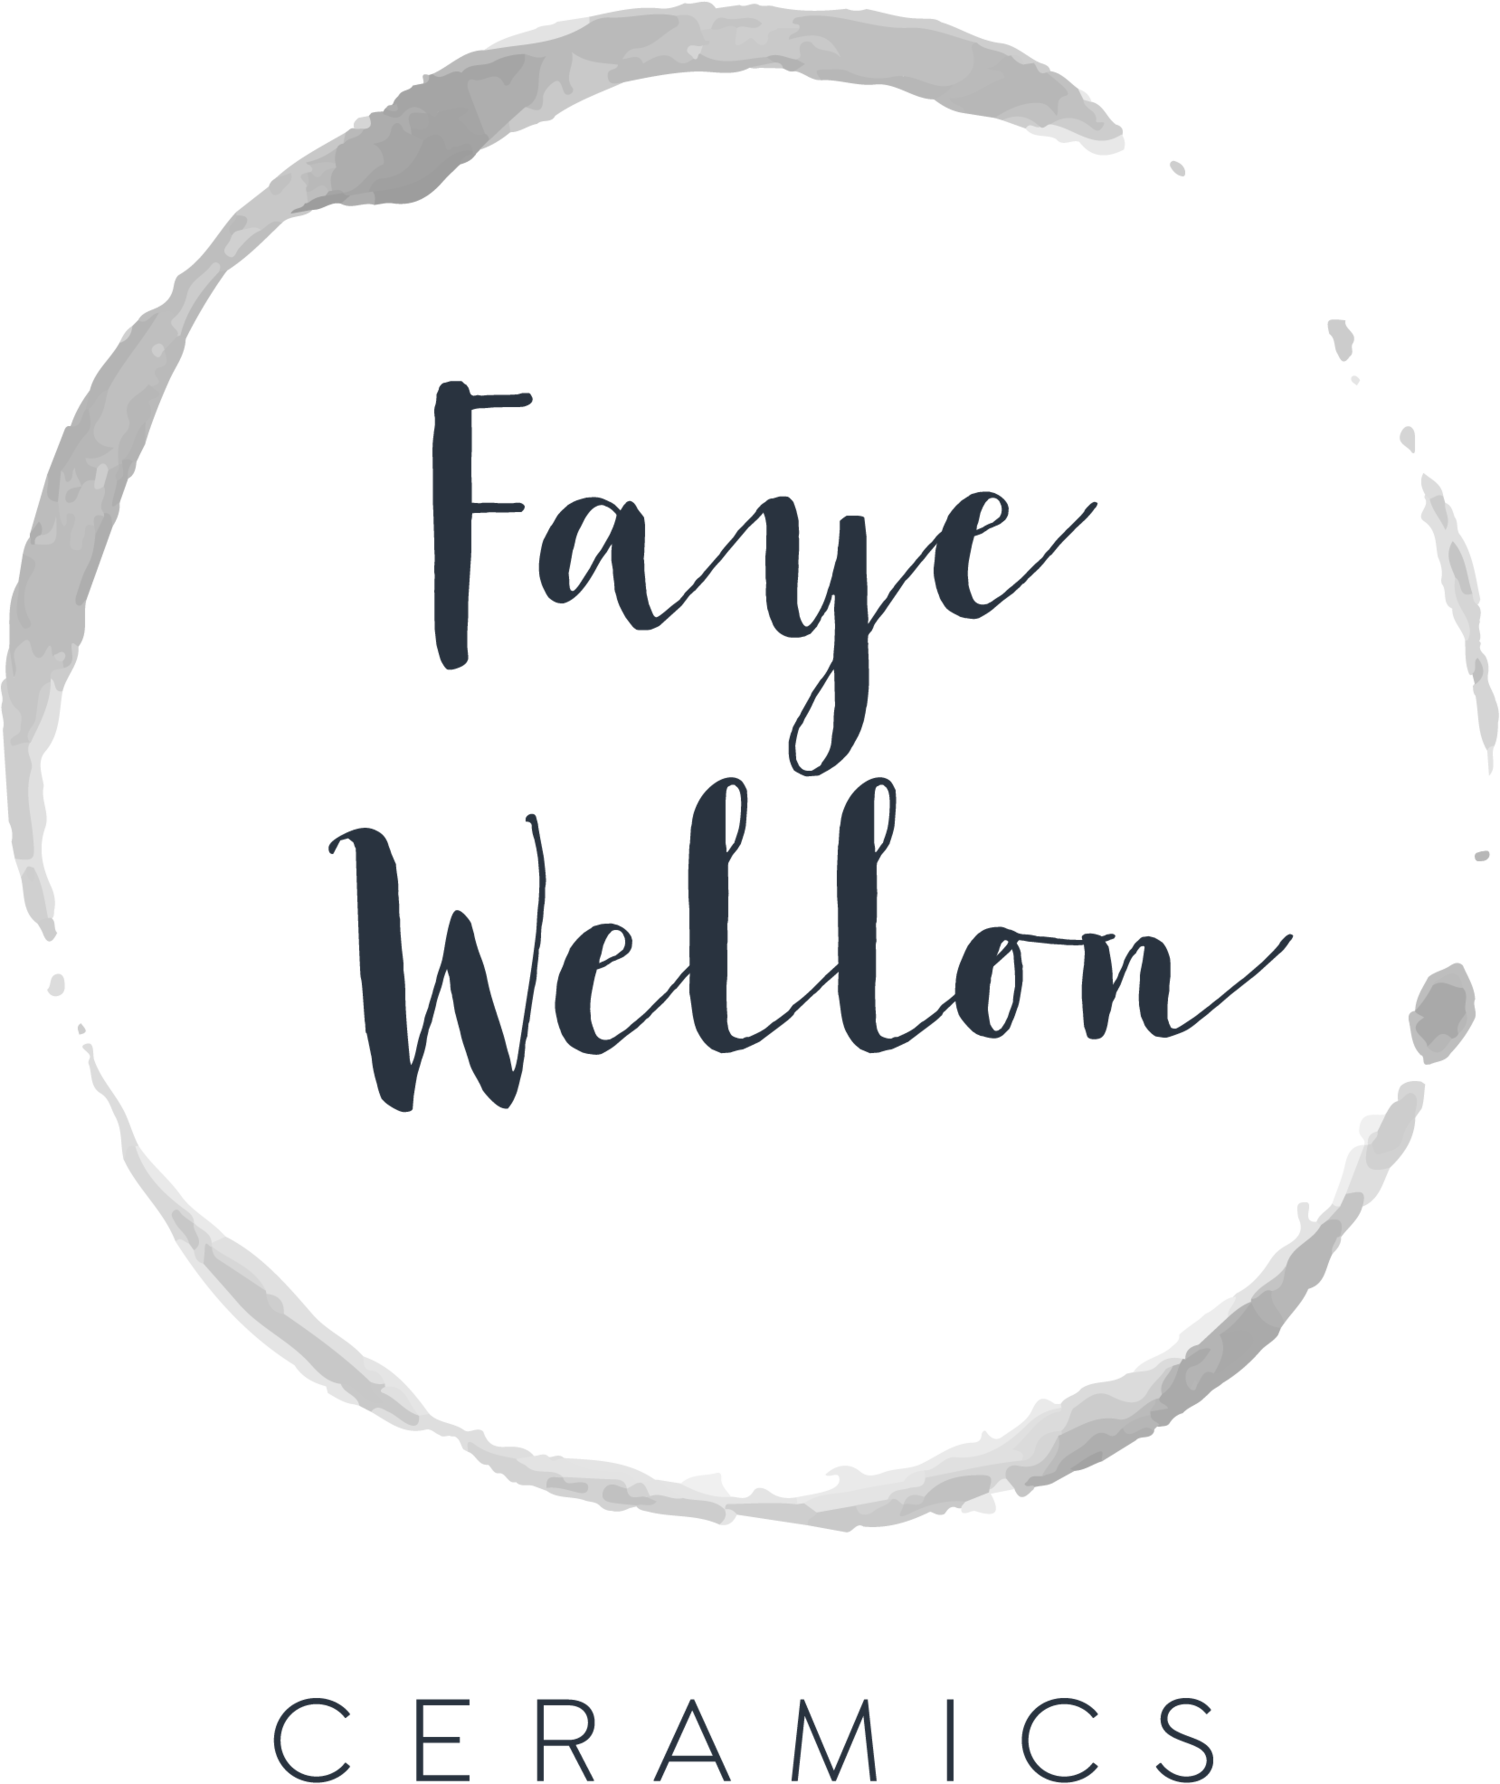 Faye Wellon Ceramics